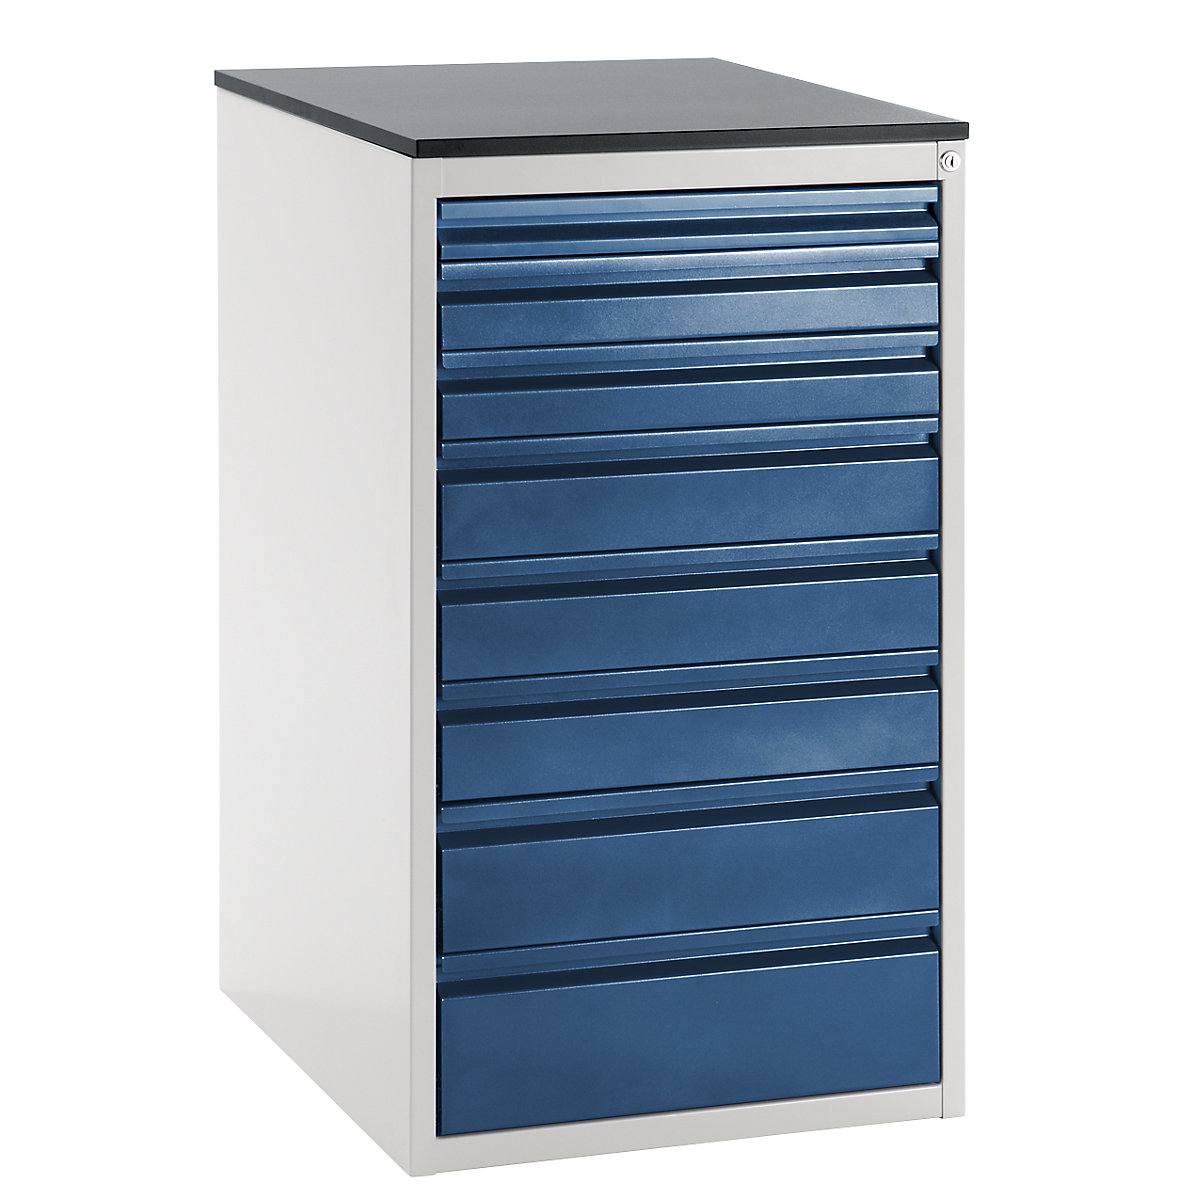 Drawer cupboard with telescopic guides – RAU, height 1030 mm, drawers: 1 x 60, 2 x 90, 3 x 120, 1 x 150, 1 x 180 mm, light grey / gentian blue, width 580 mm-3